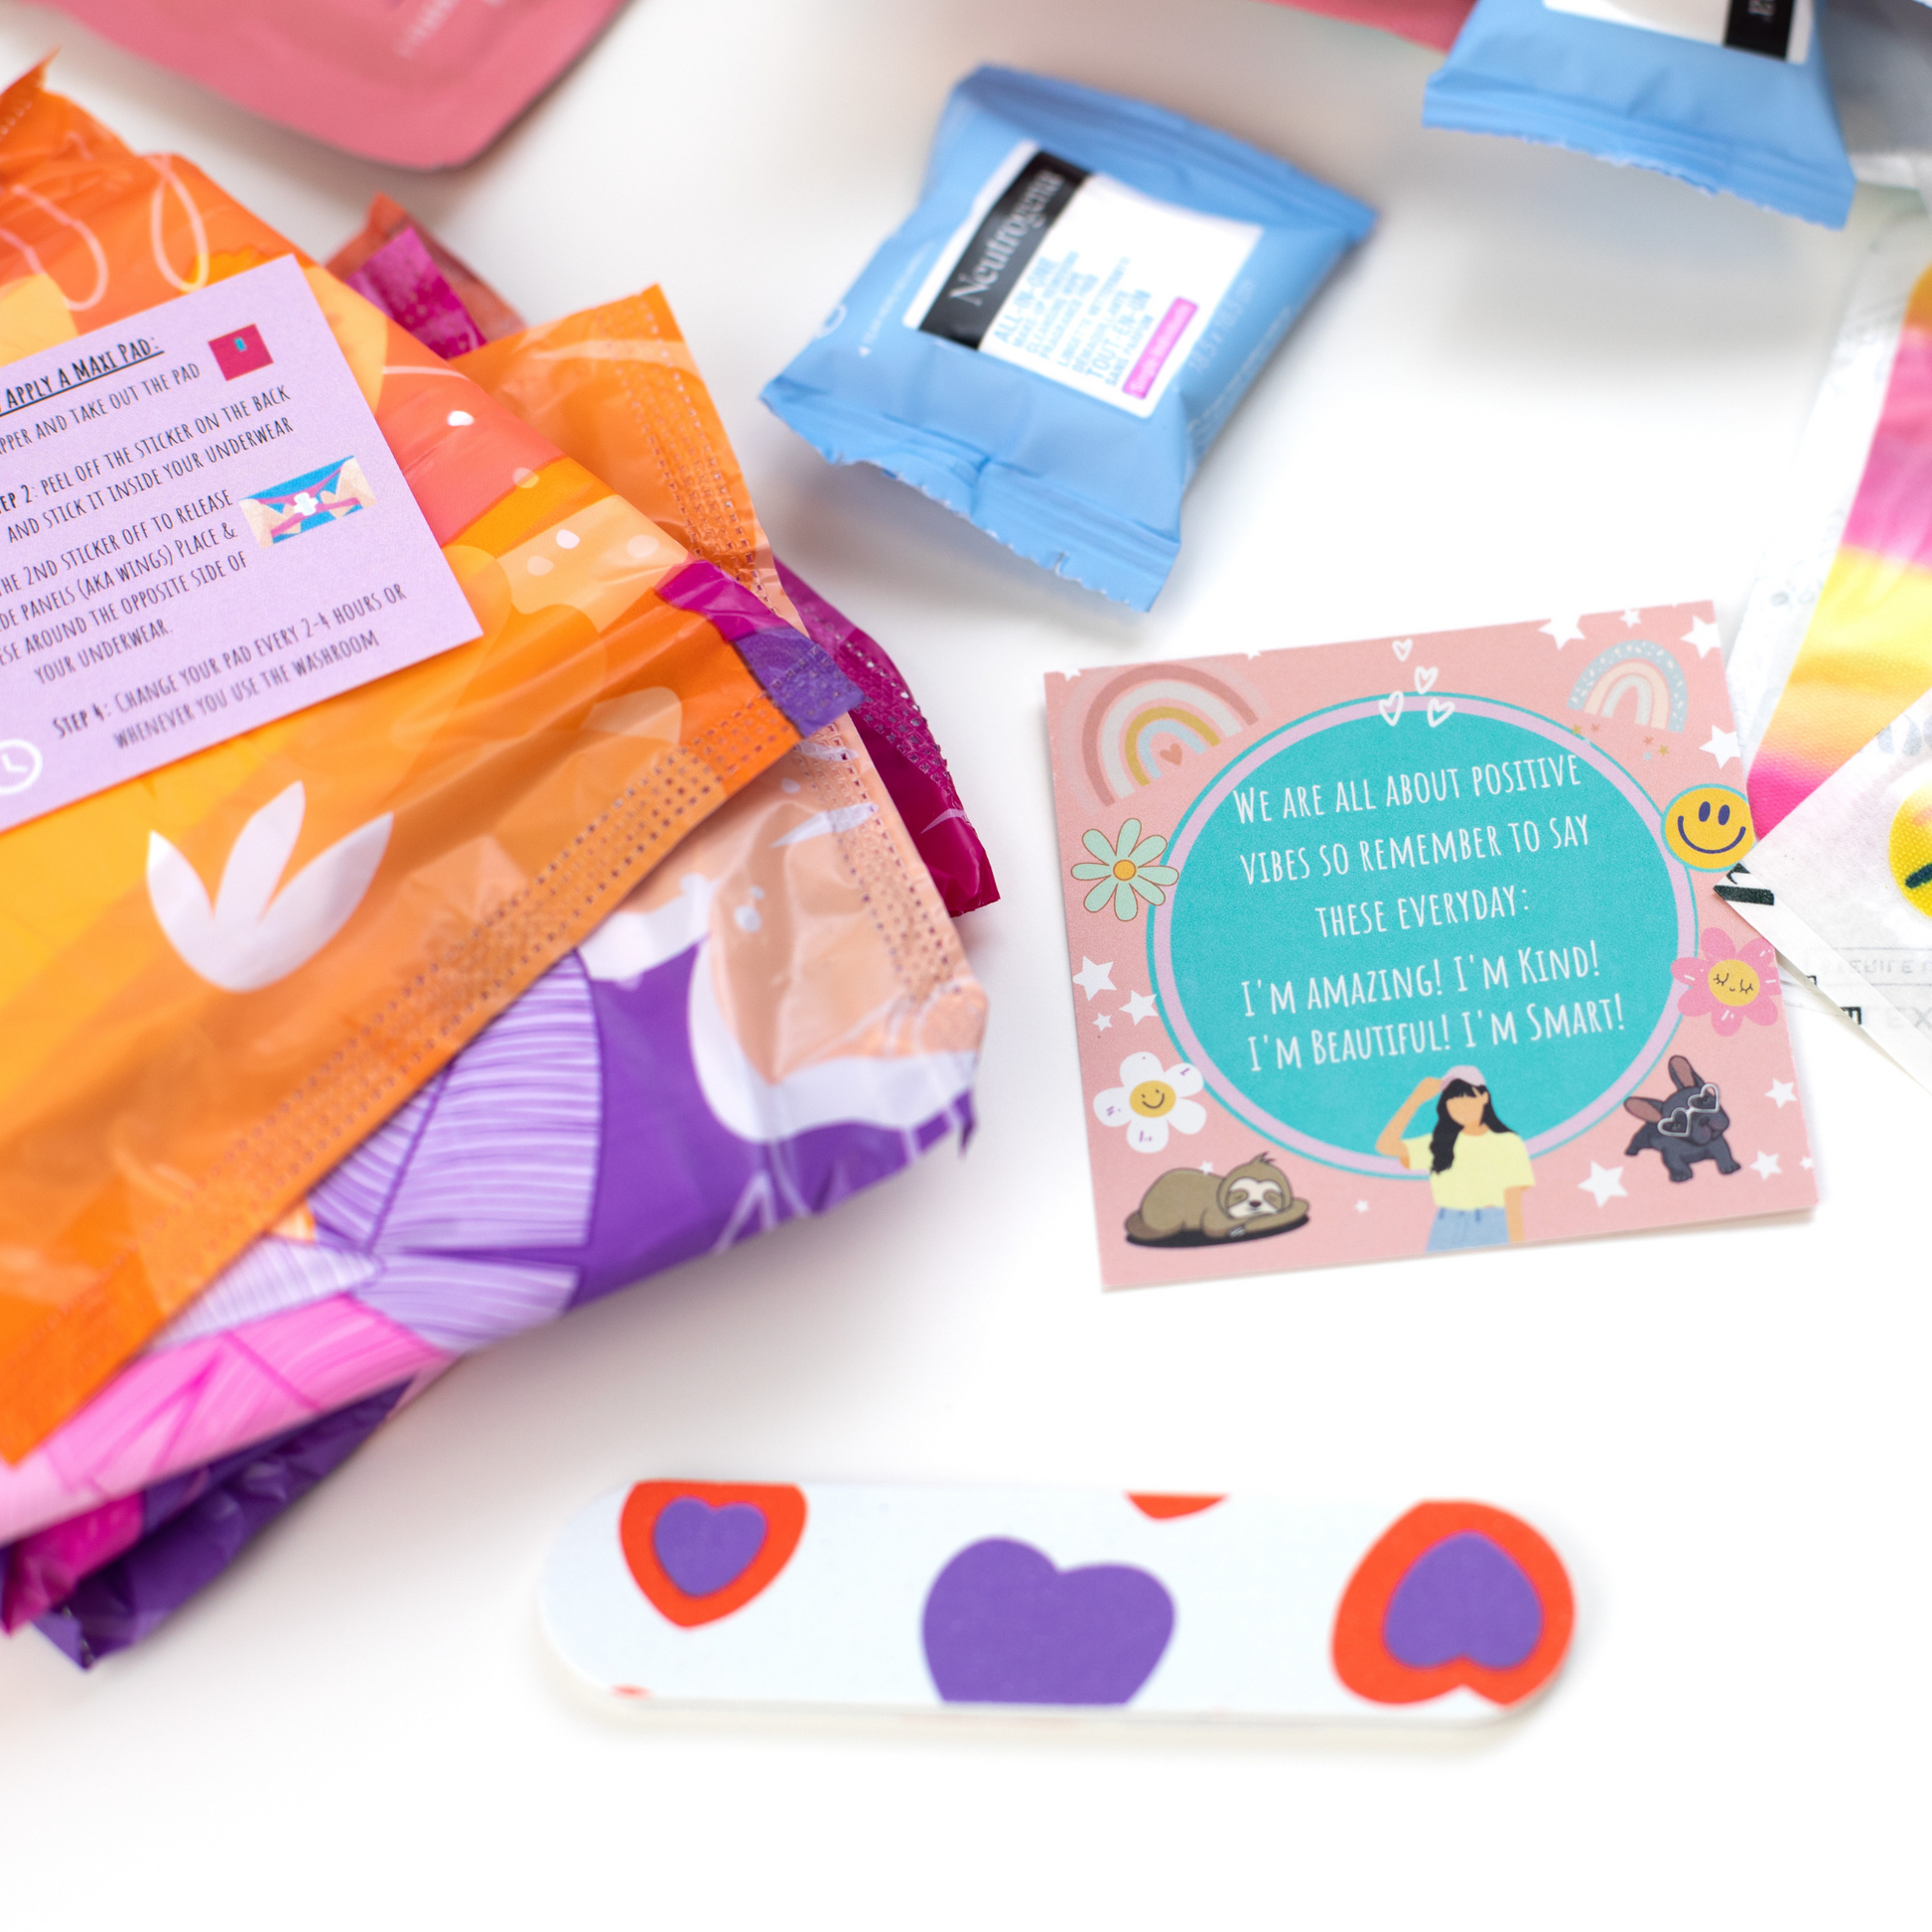 Tween Girl First Period Kit – Girl E Kits